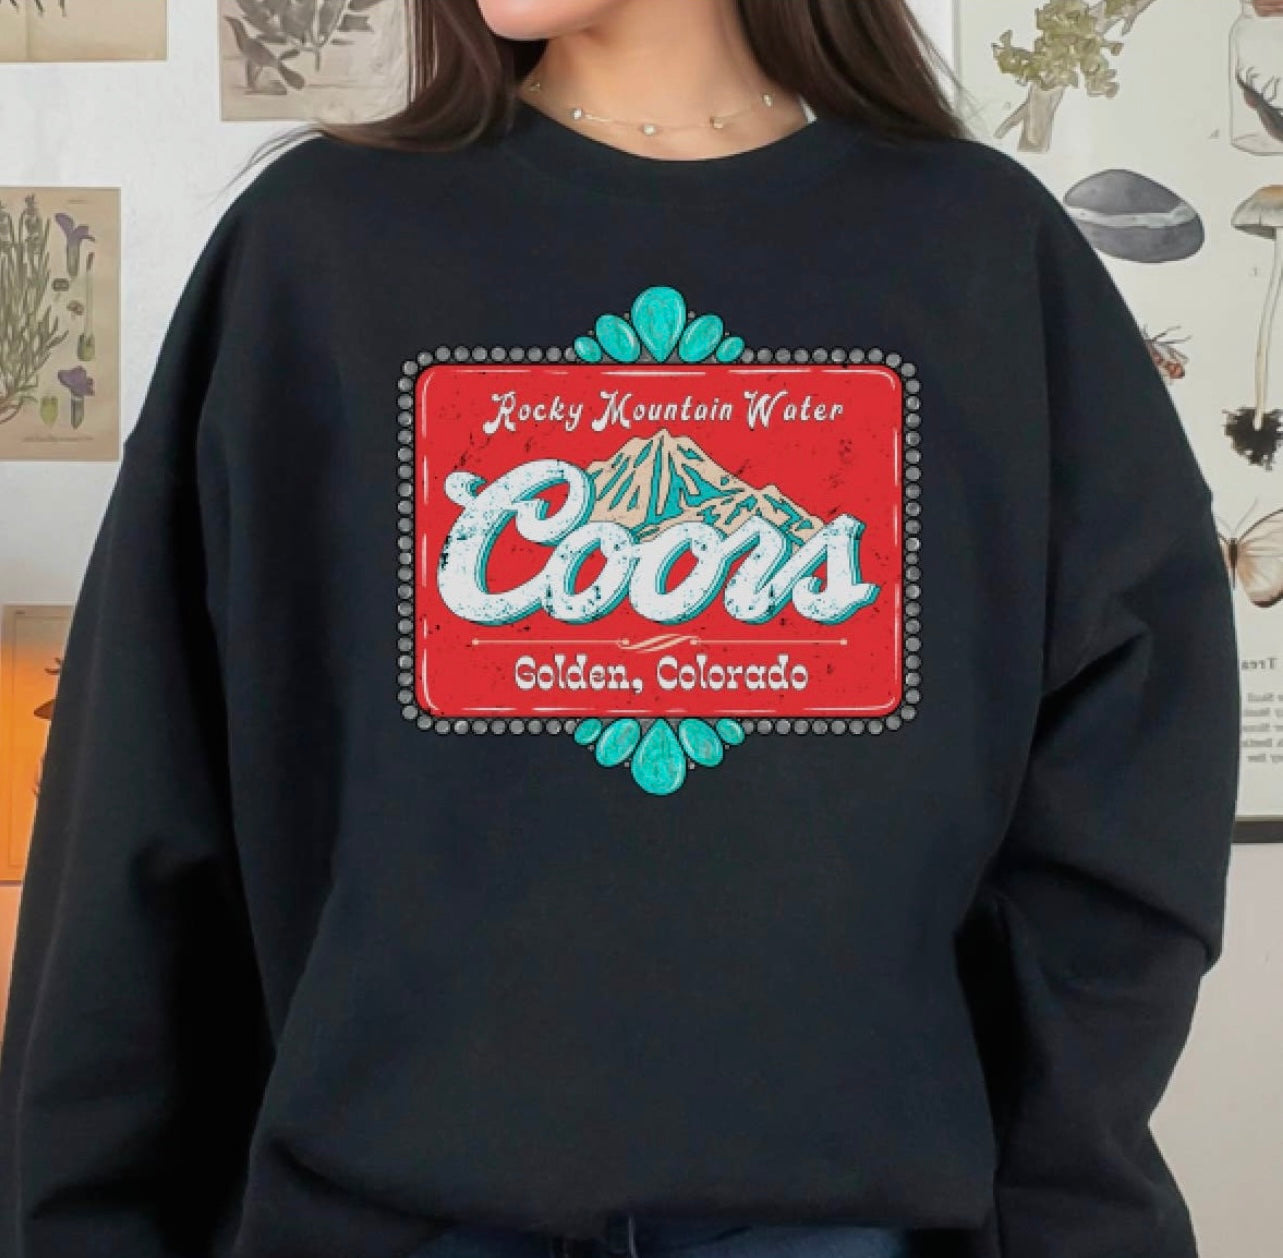 Coors Sweatshirt